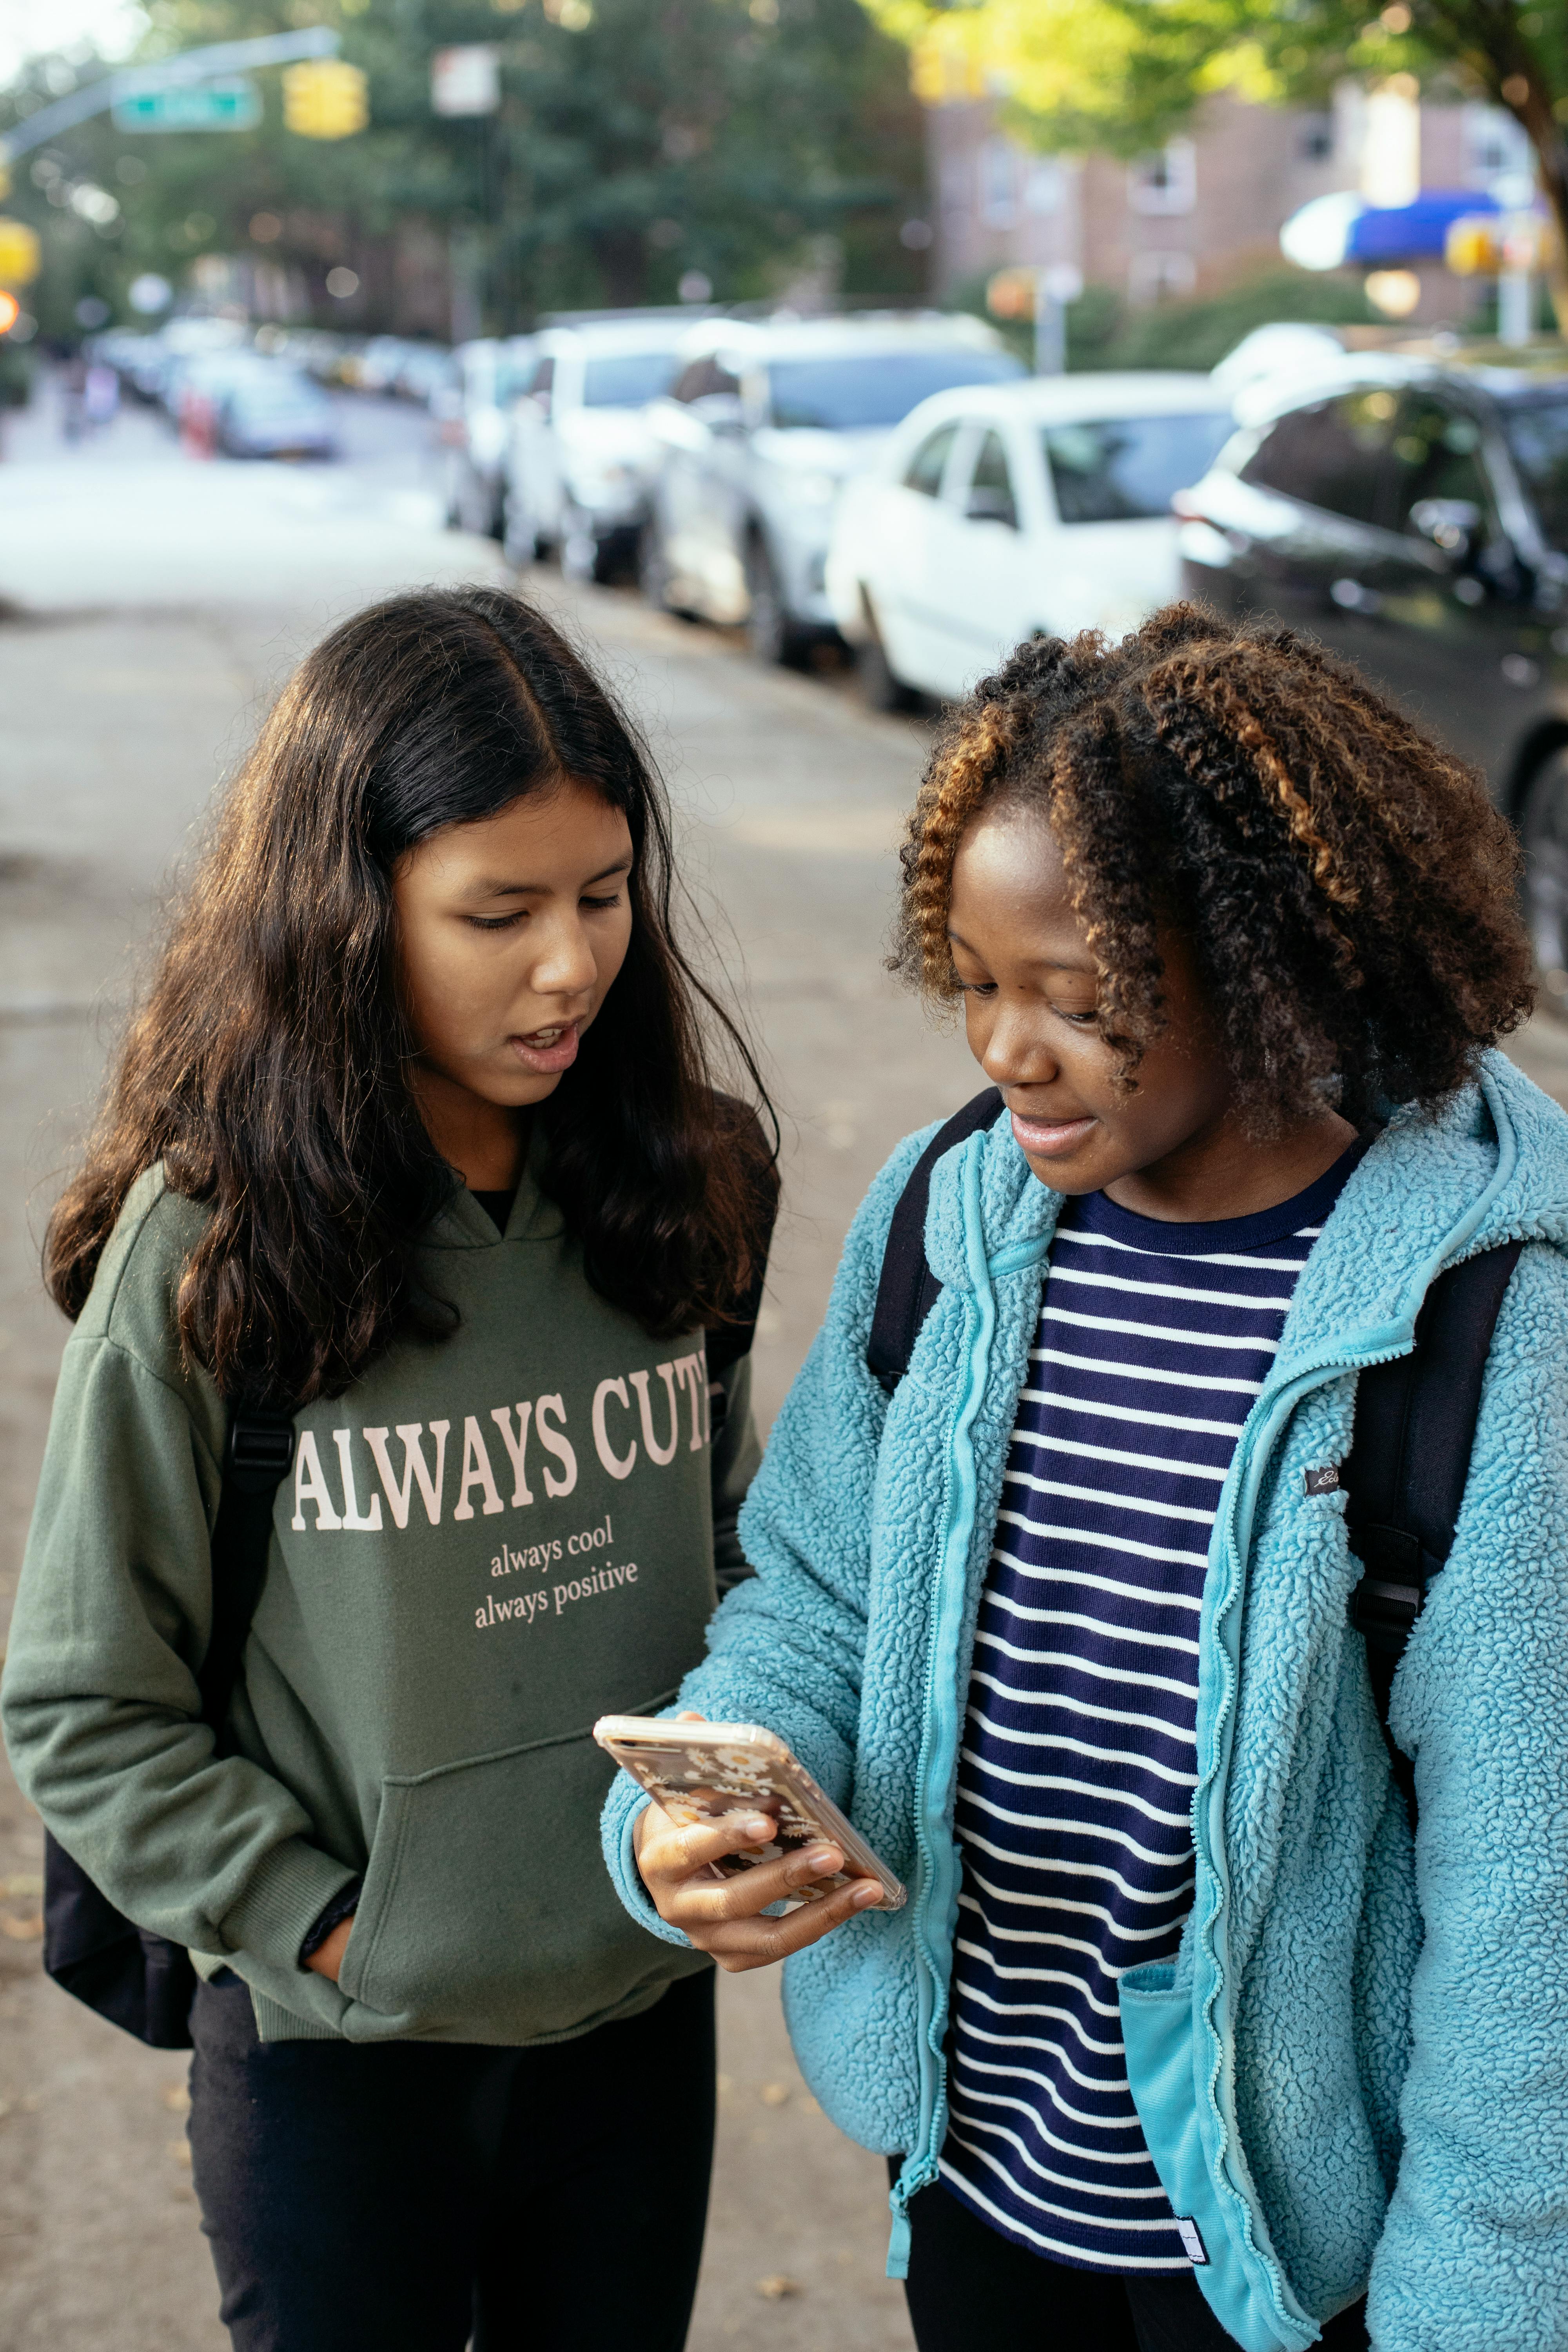 multiethnic classmates chatting on smartphone together